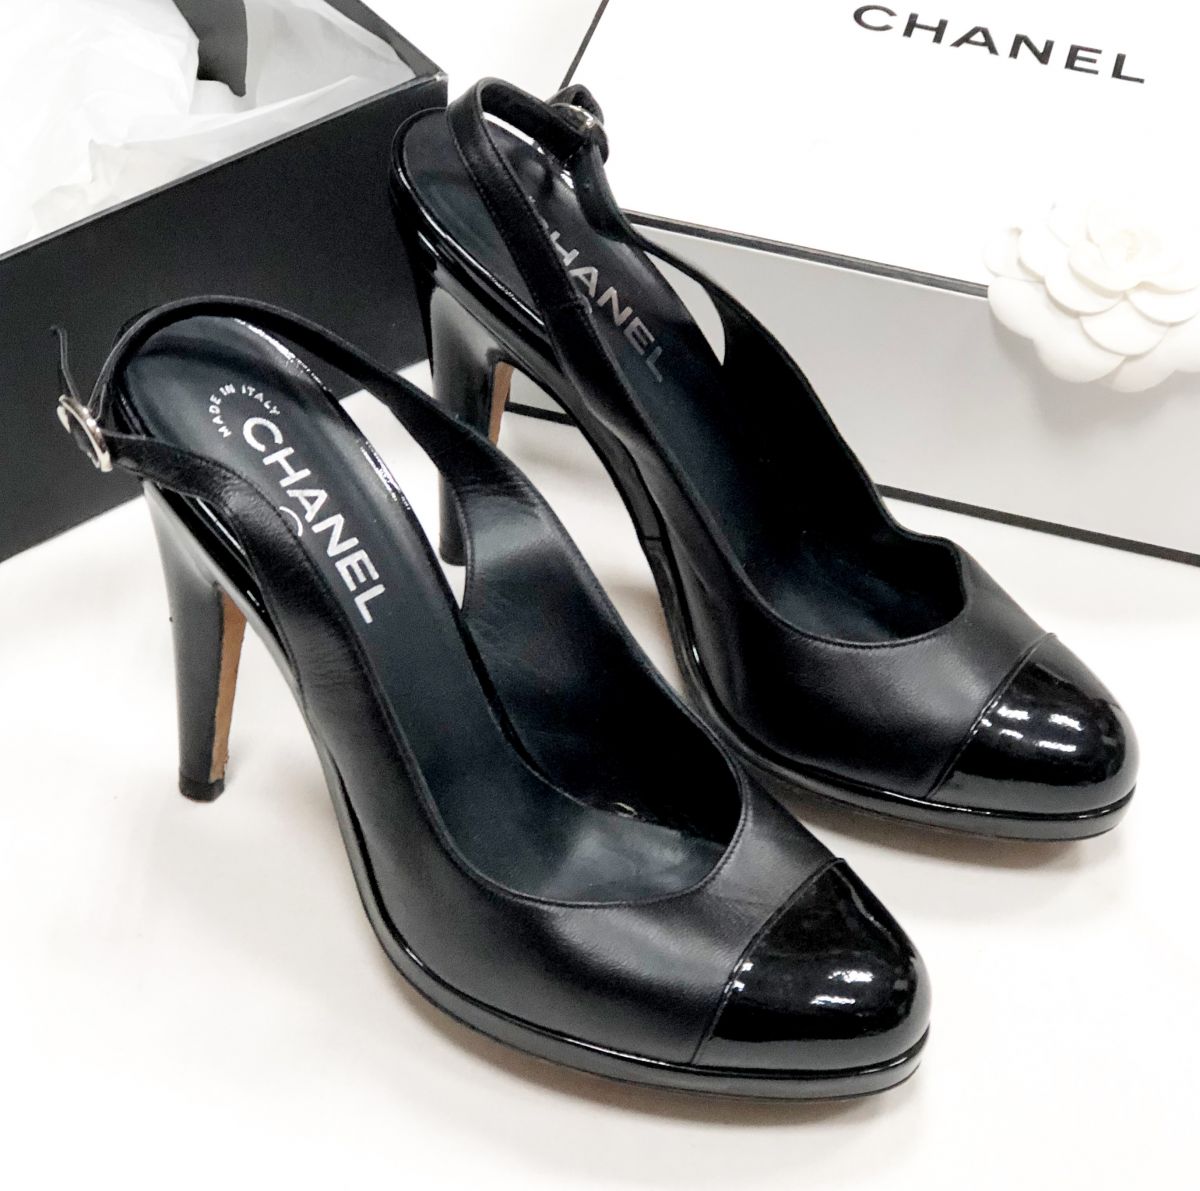 Босоножки Chanel размер 40 цена 10 770 руб 